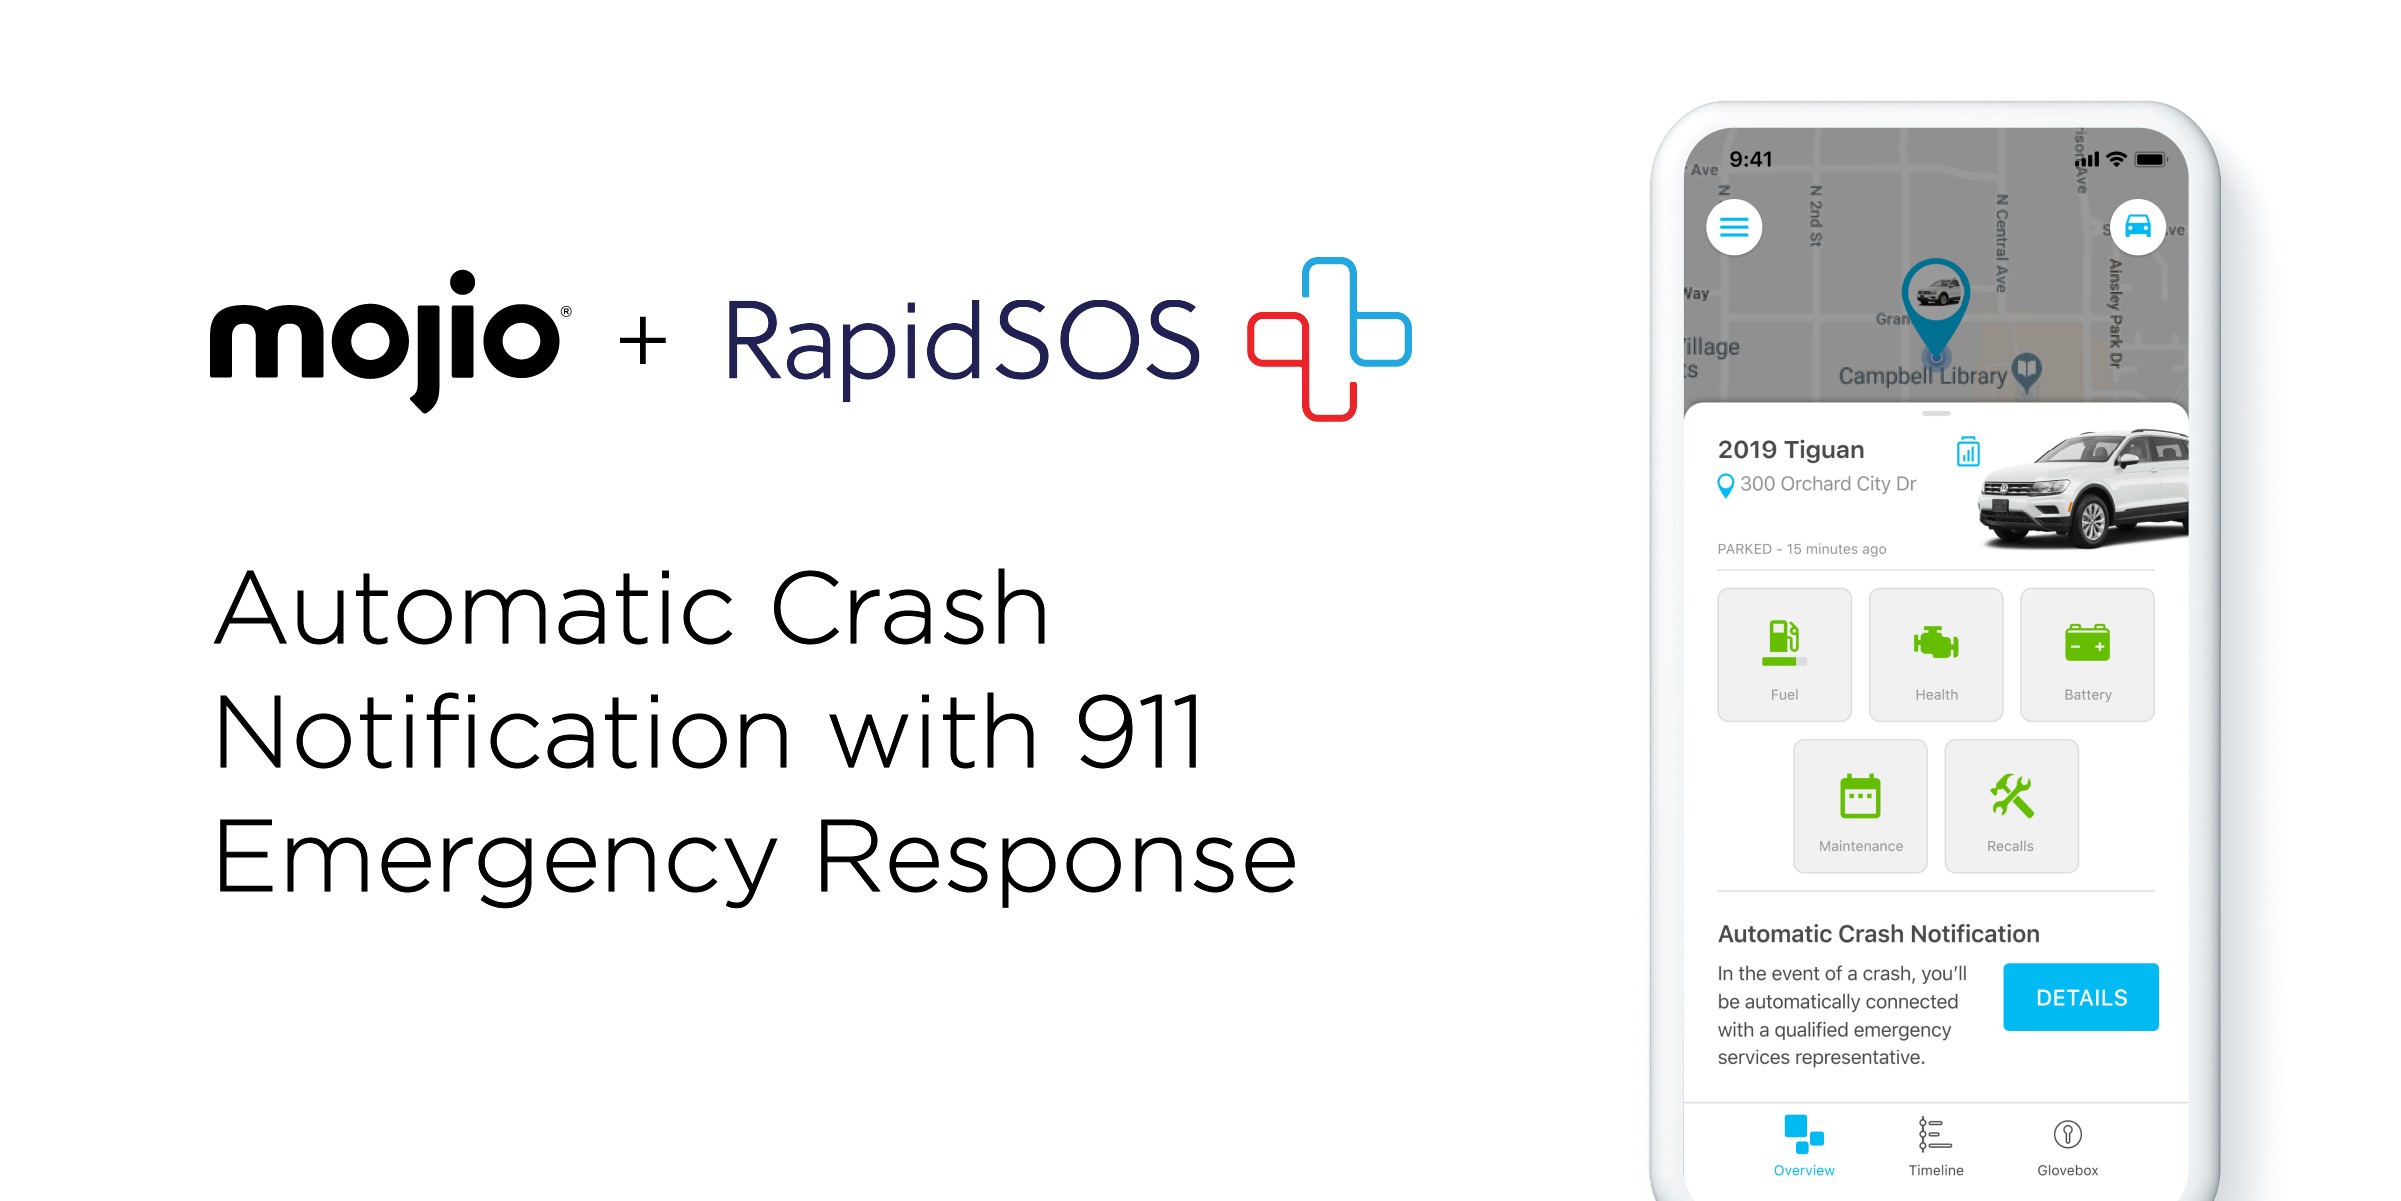 Mojio + RapidSOS. Automatic Crash Notification with 911 Emergency Response